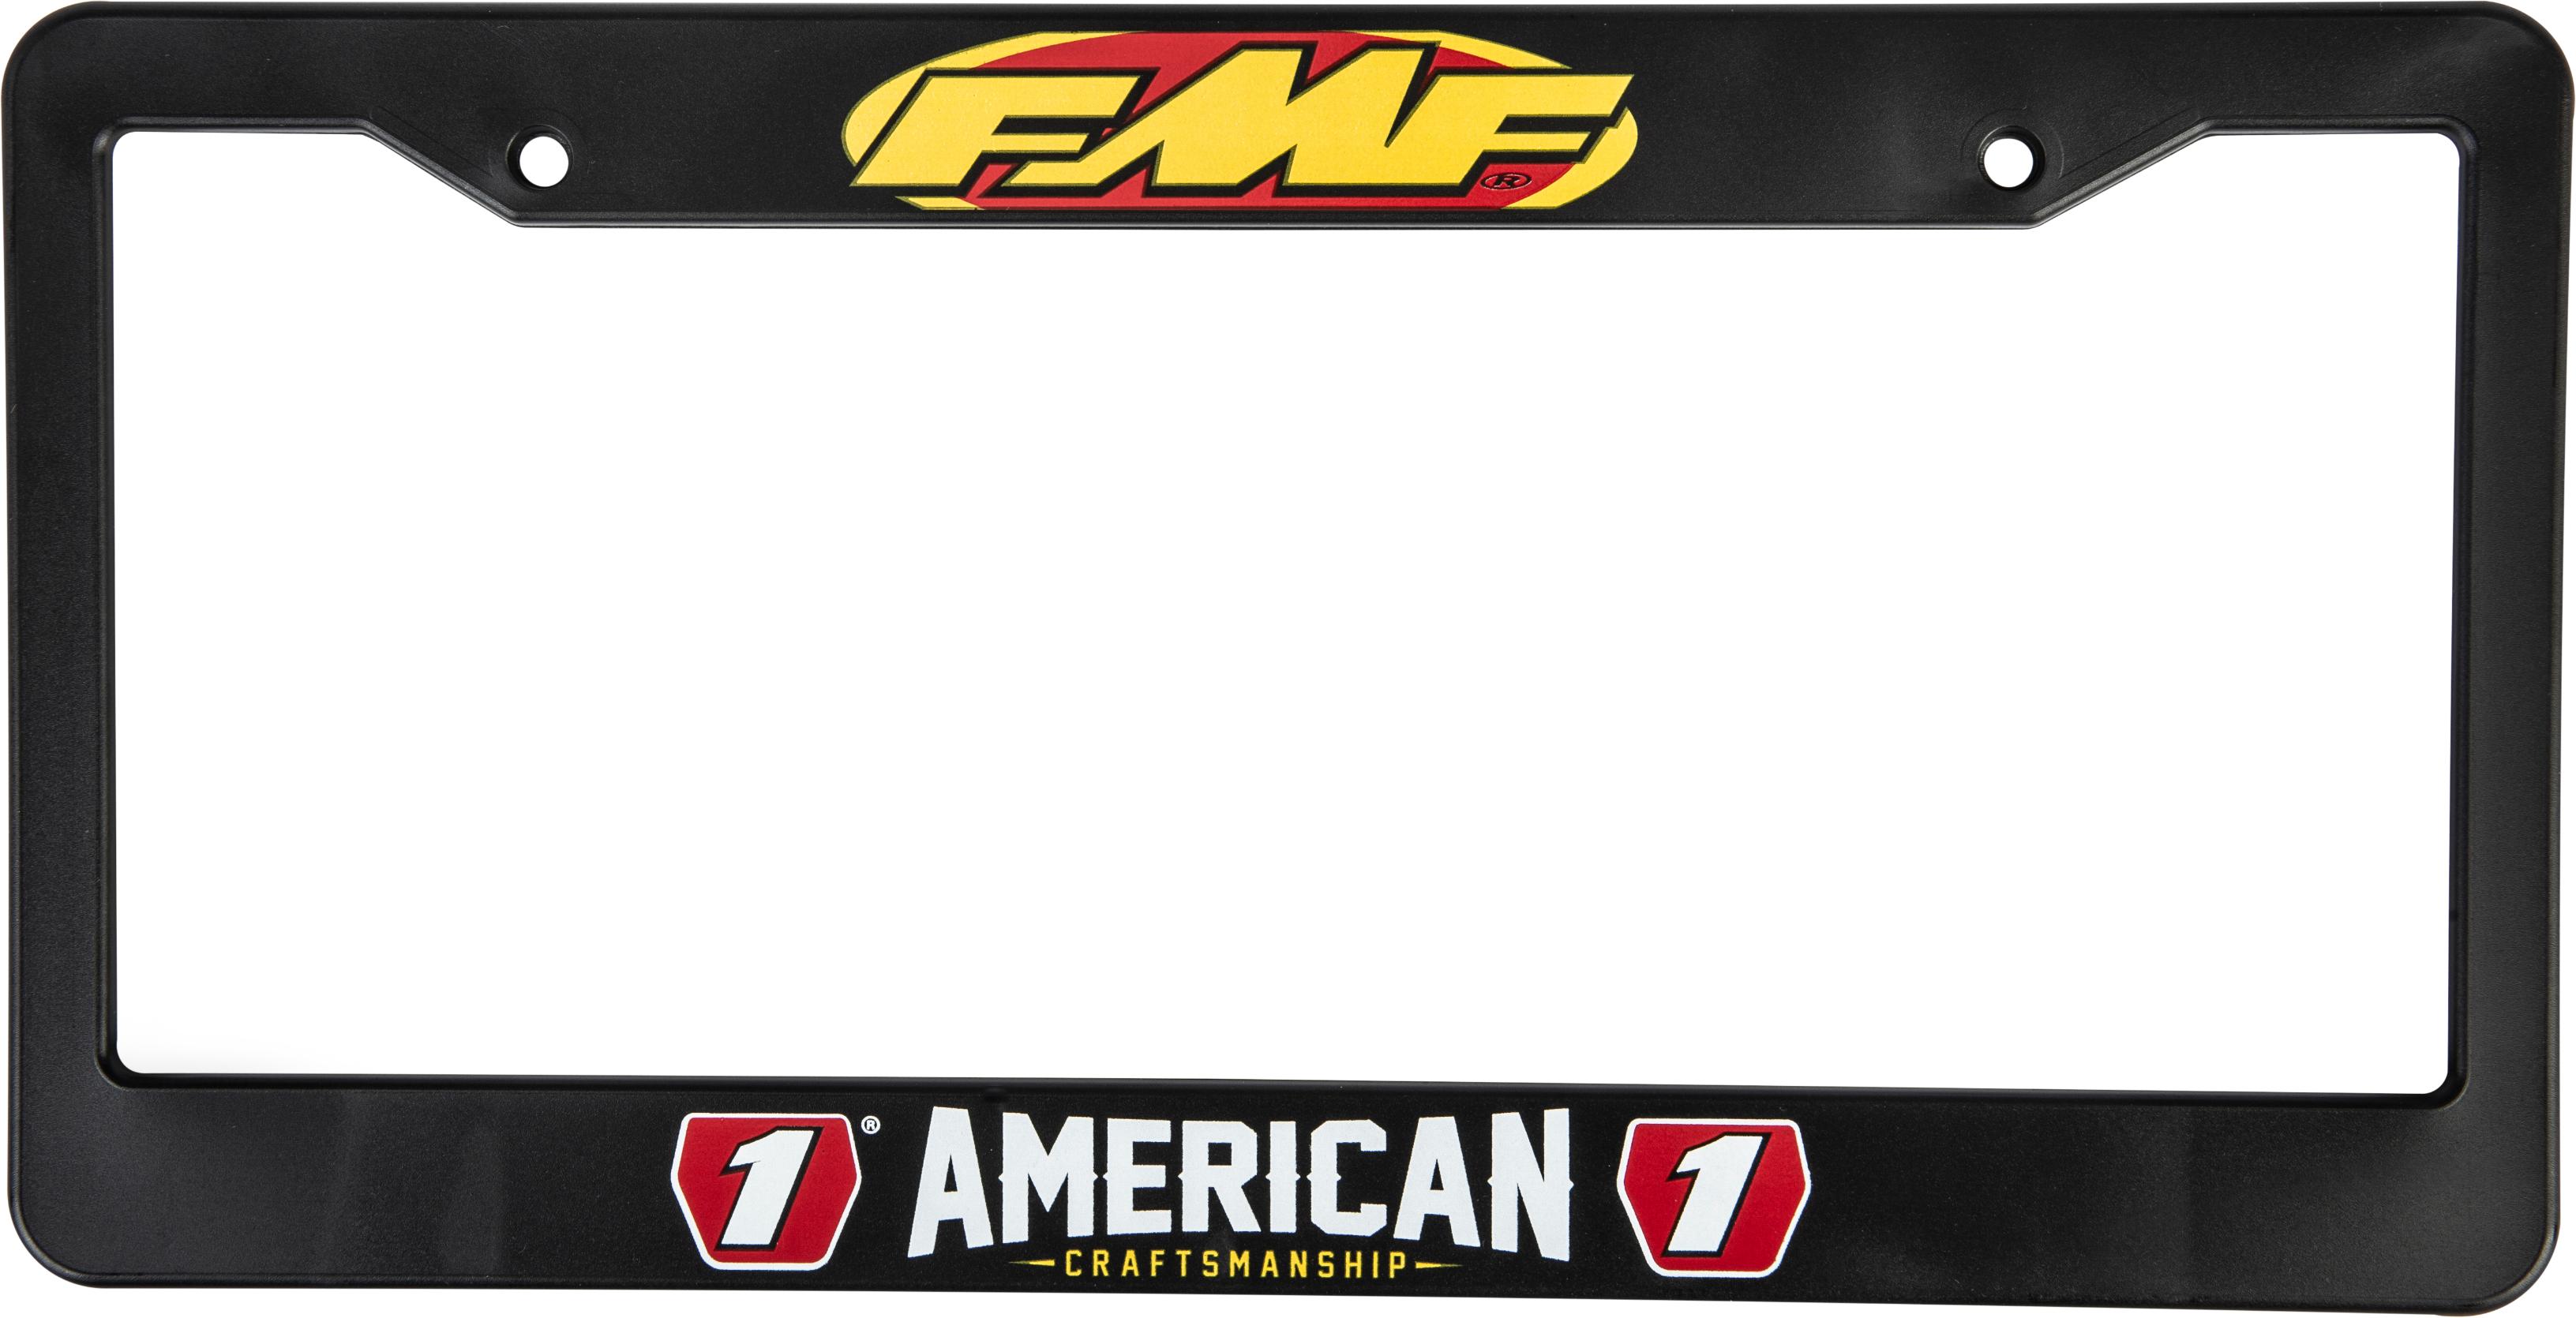 Fmf - Auto License Plate Frame - 11232